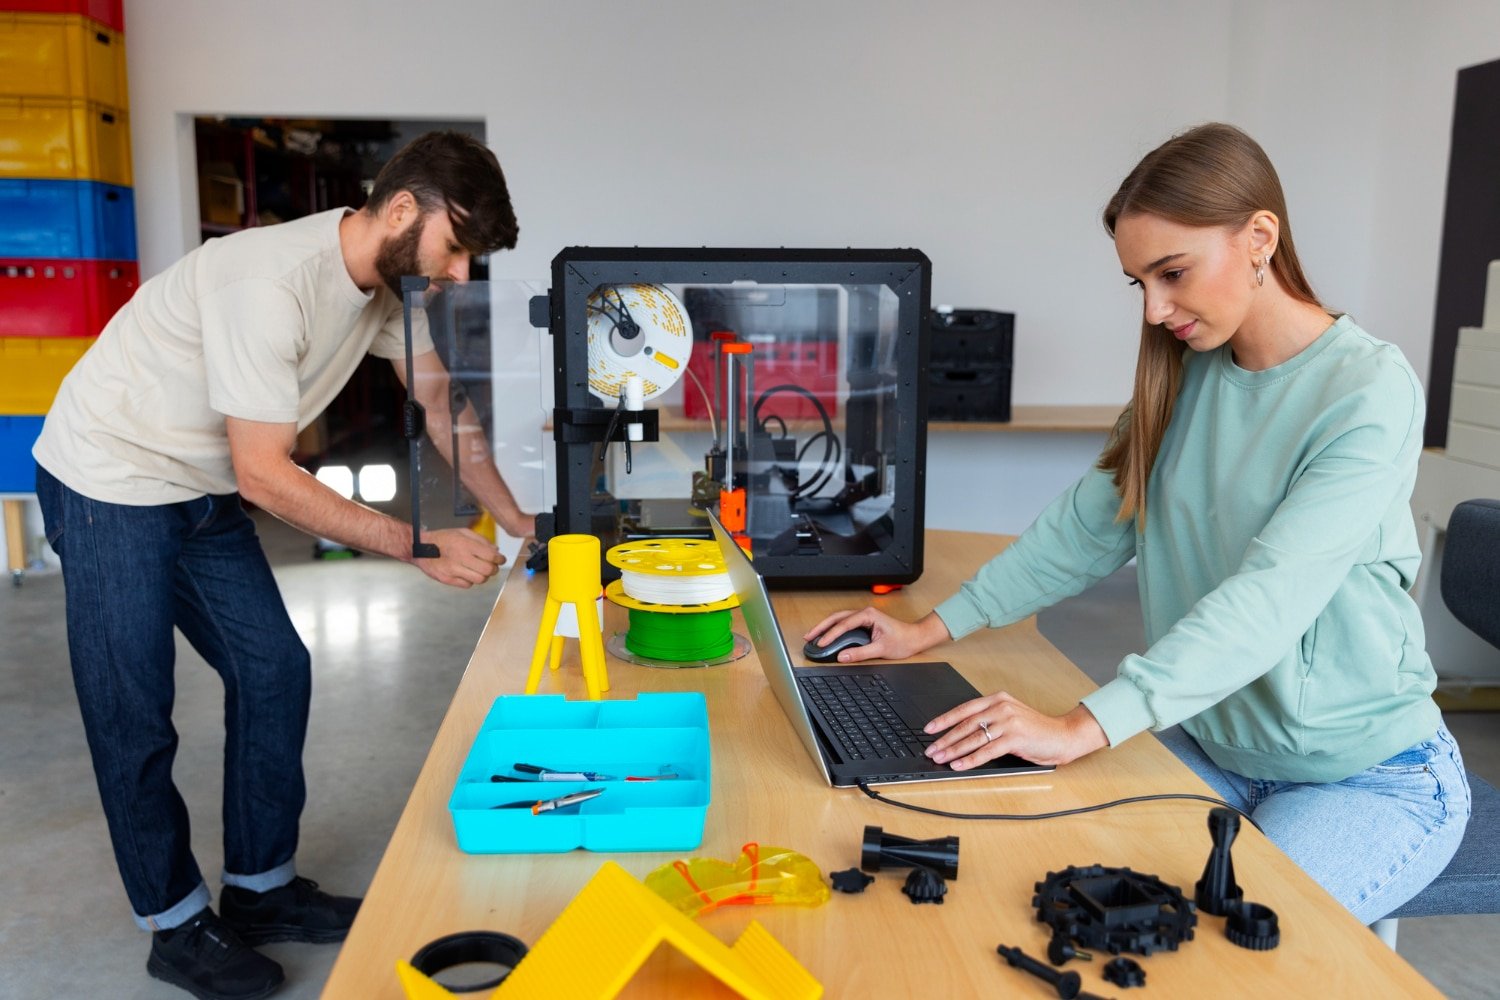 ELEGOO Pushing Boundaries in 3D Printing